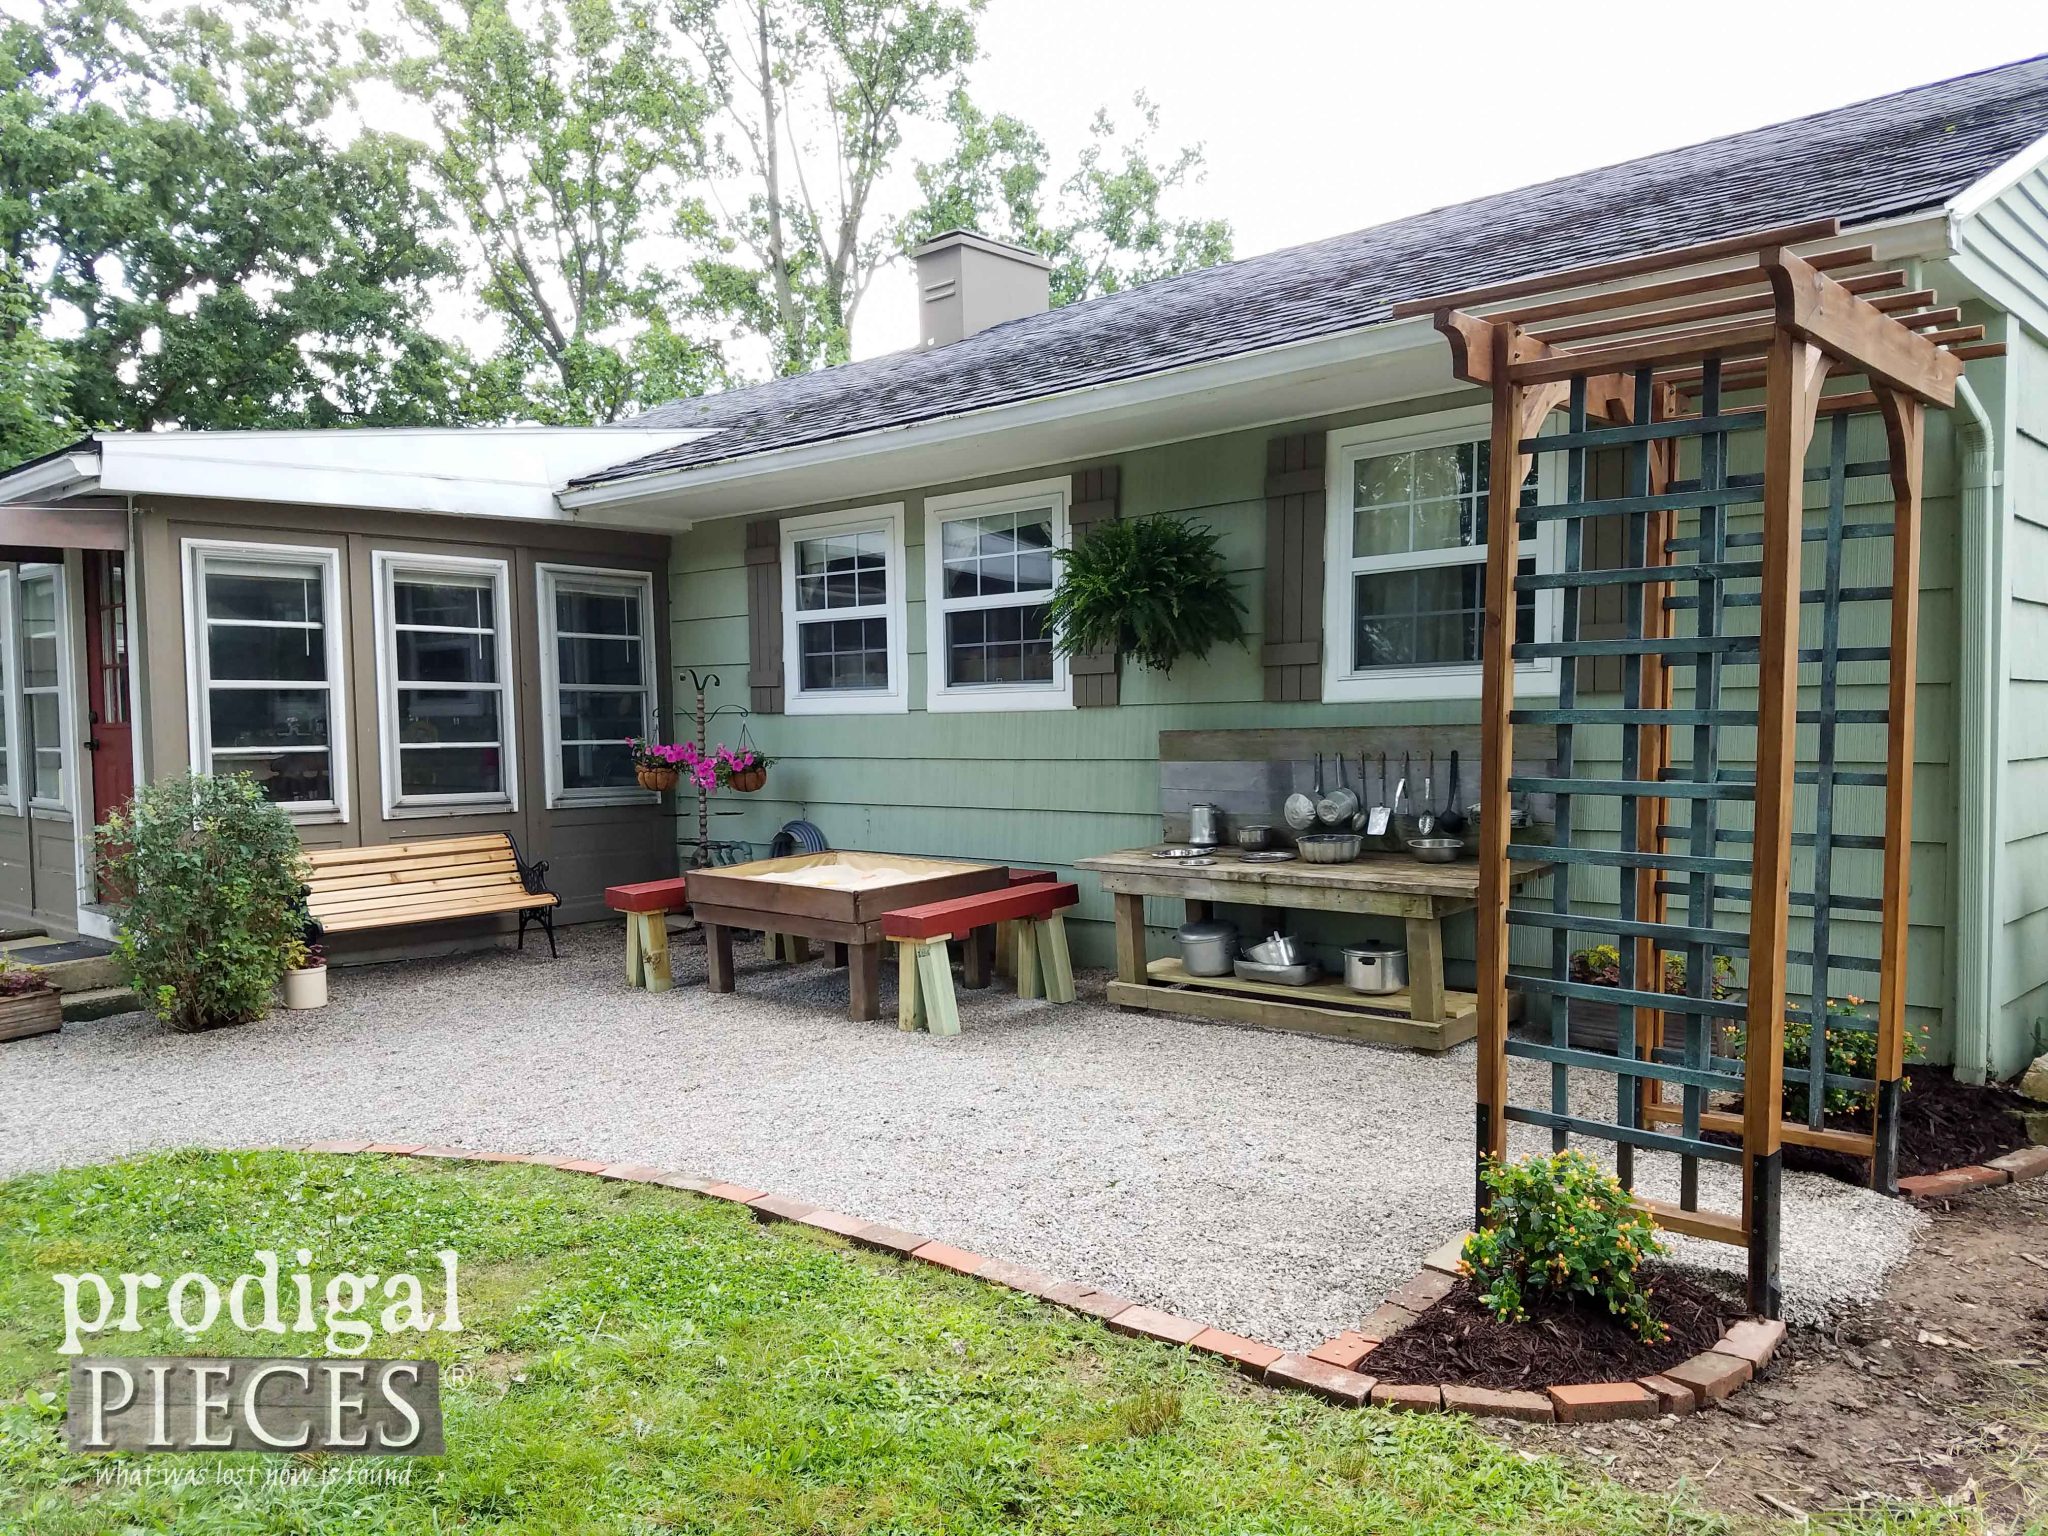 DIY Backyard Play Area with DIY Garden Arbor Tutorials by Prodigal Pieces | prodigalpieces.com